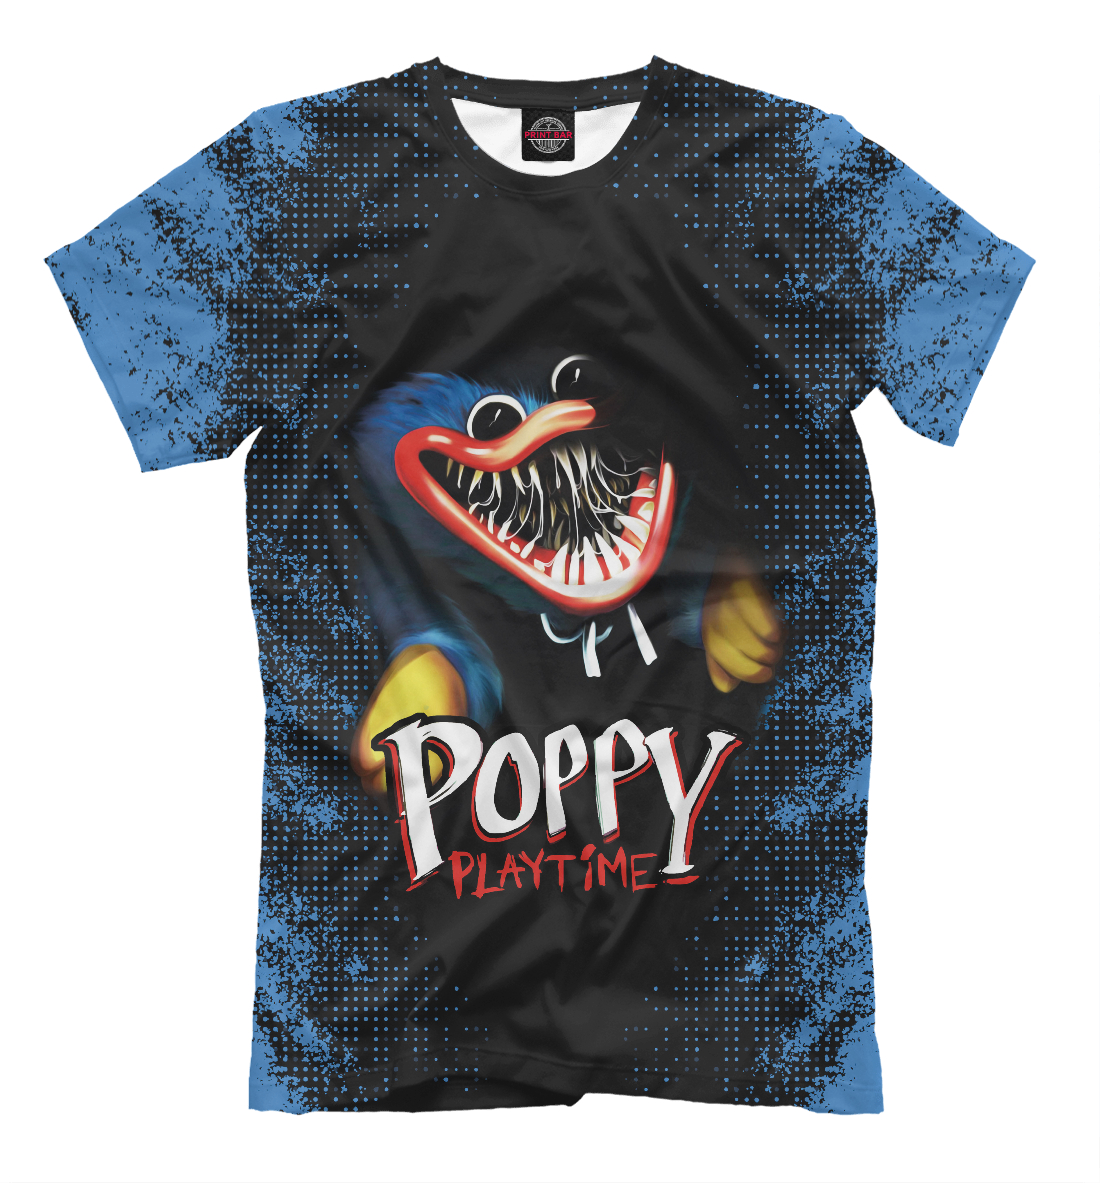 Футболка Poppy Playtime Хагги Вагги для мужчин, артикул: PPE-806439-fut-2mp